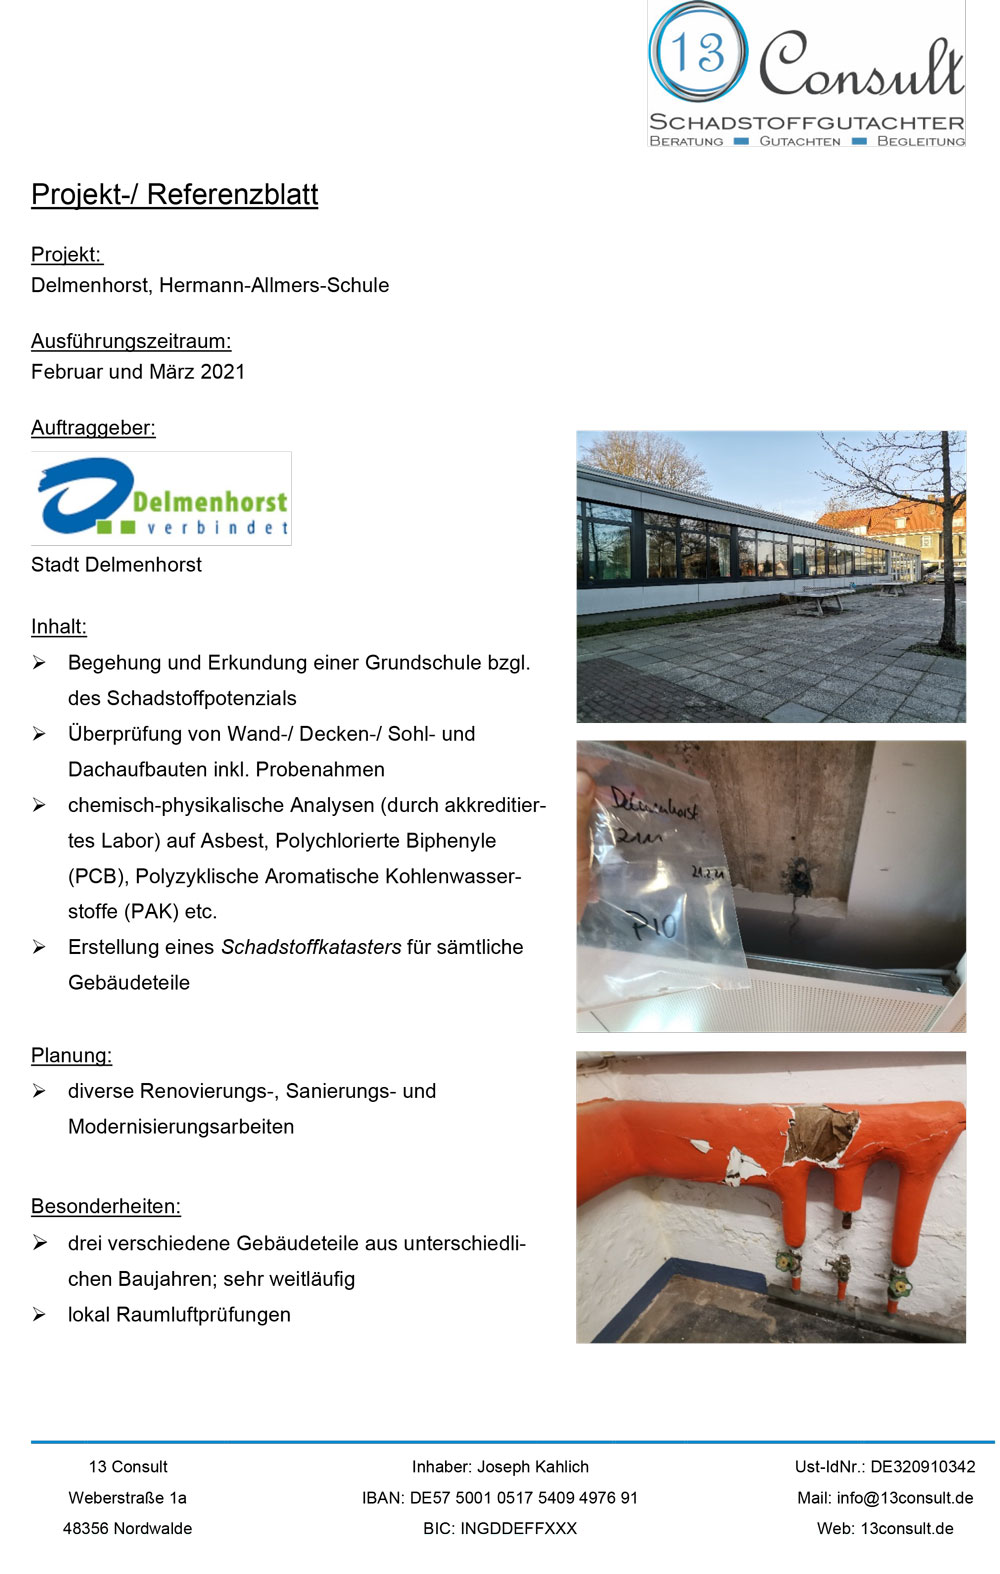 4_Projektblatt-Delmenhorst,-Hermann-Allmers-Schule_2022